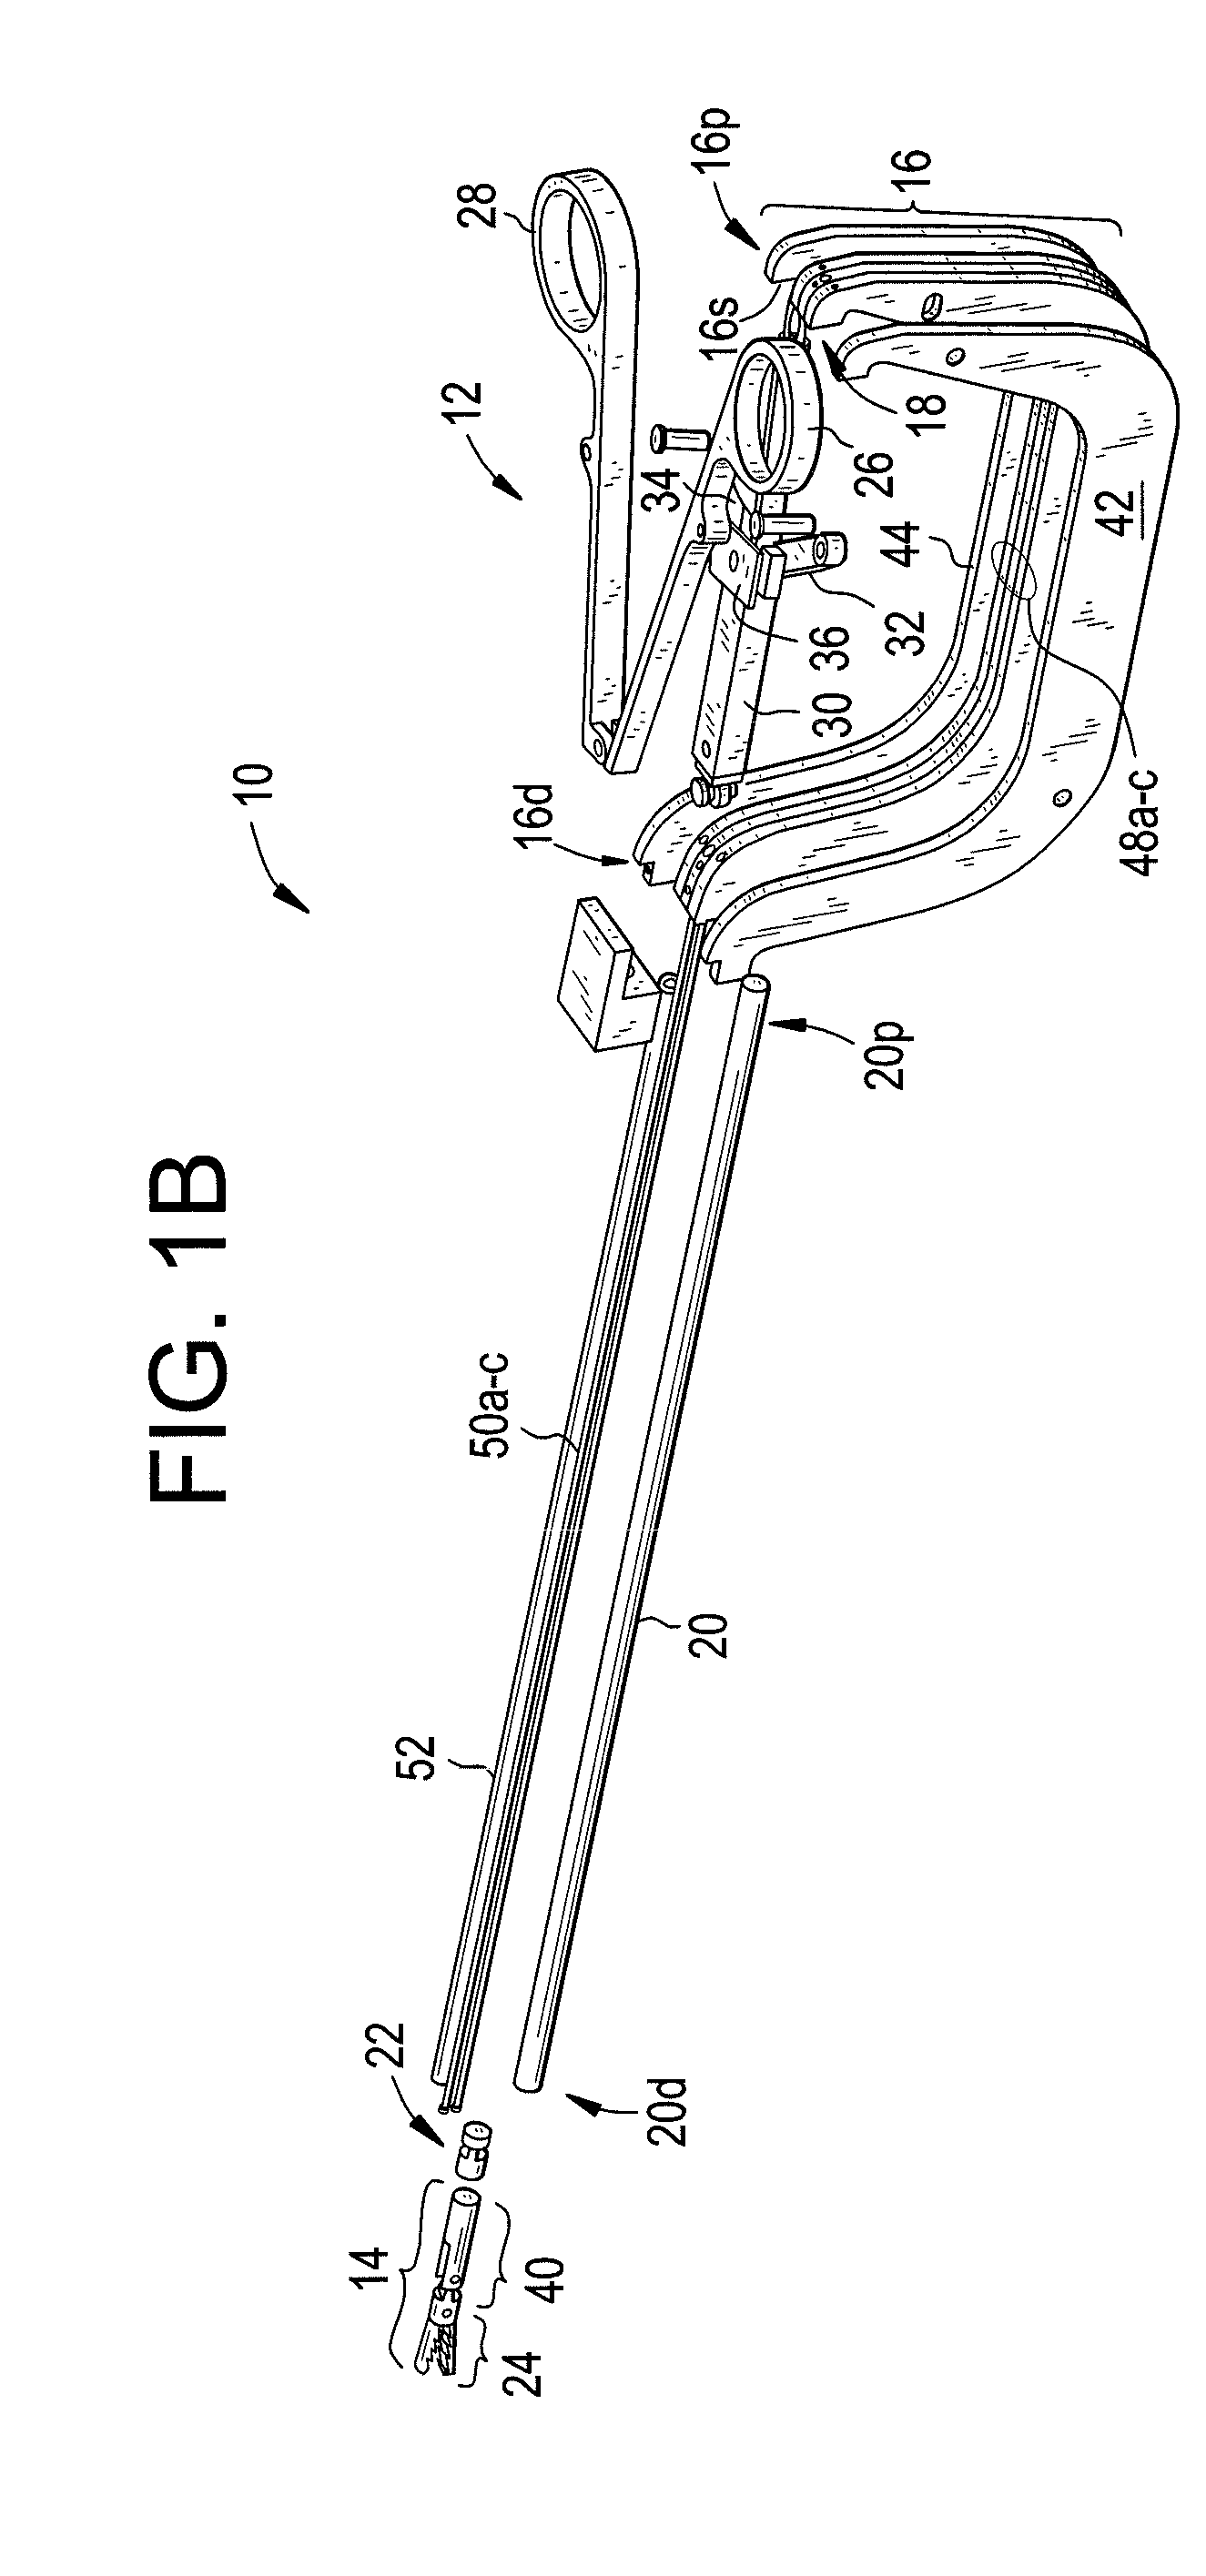 Laparoscopic device with distal handle